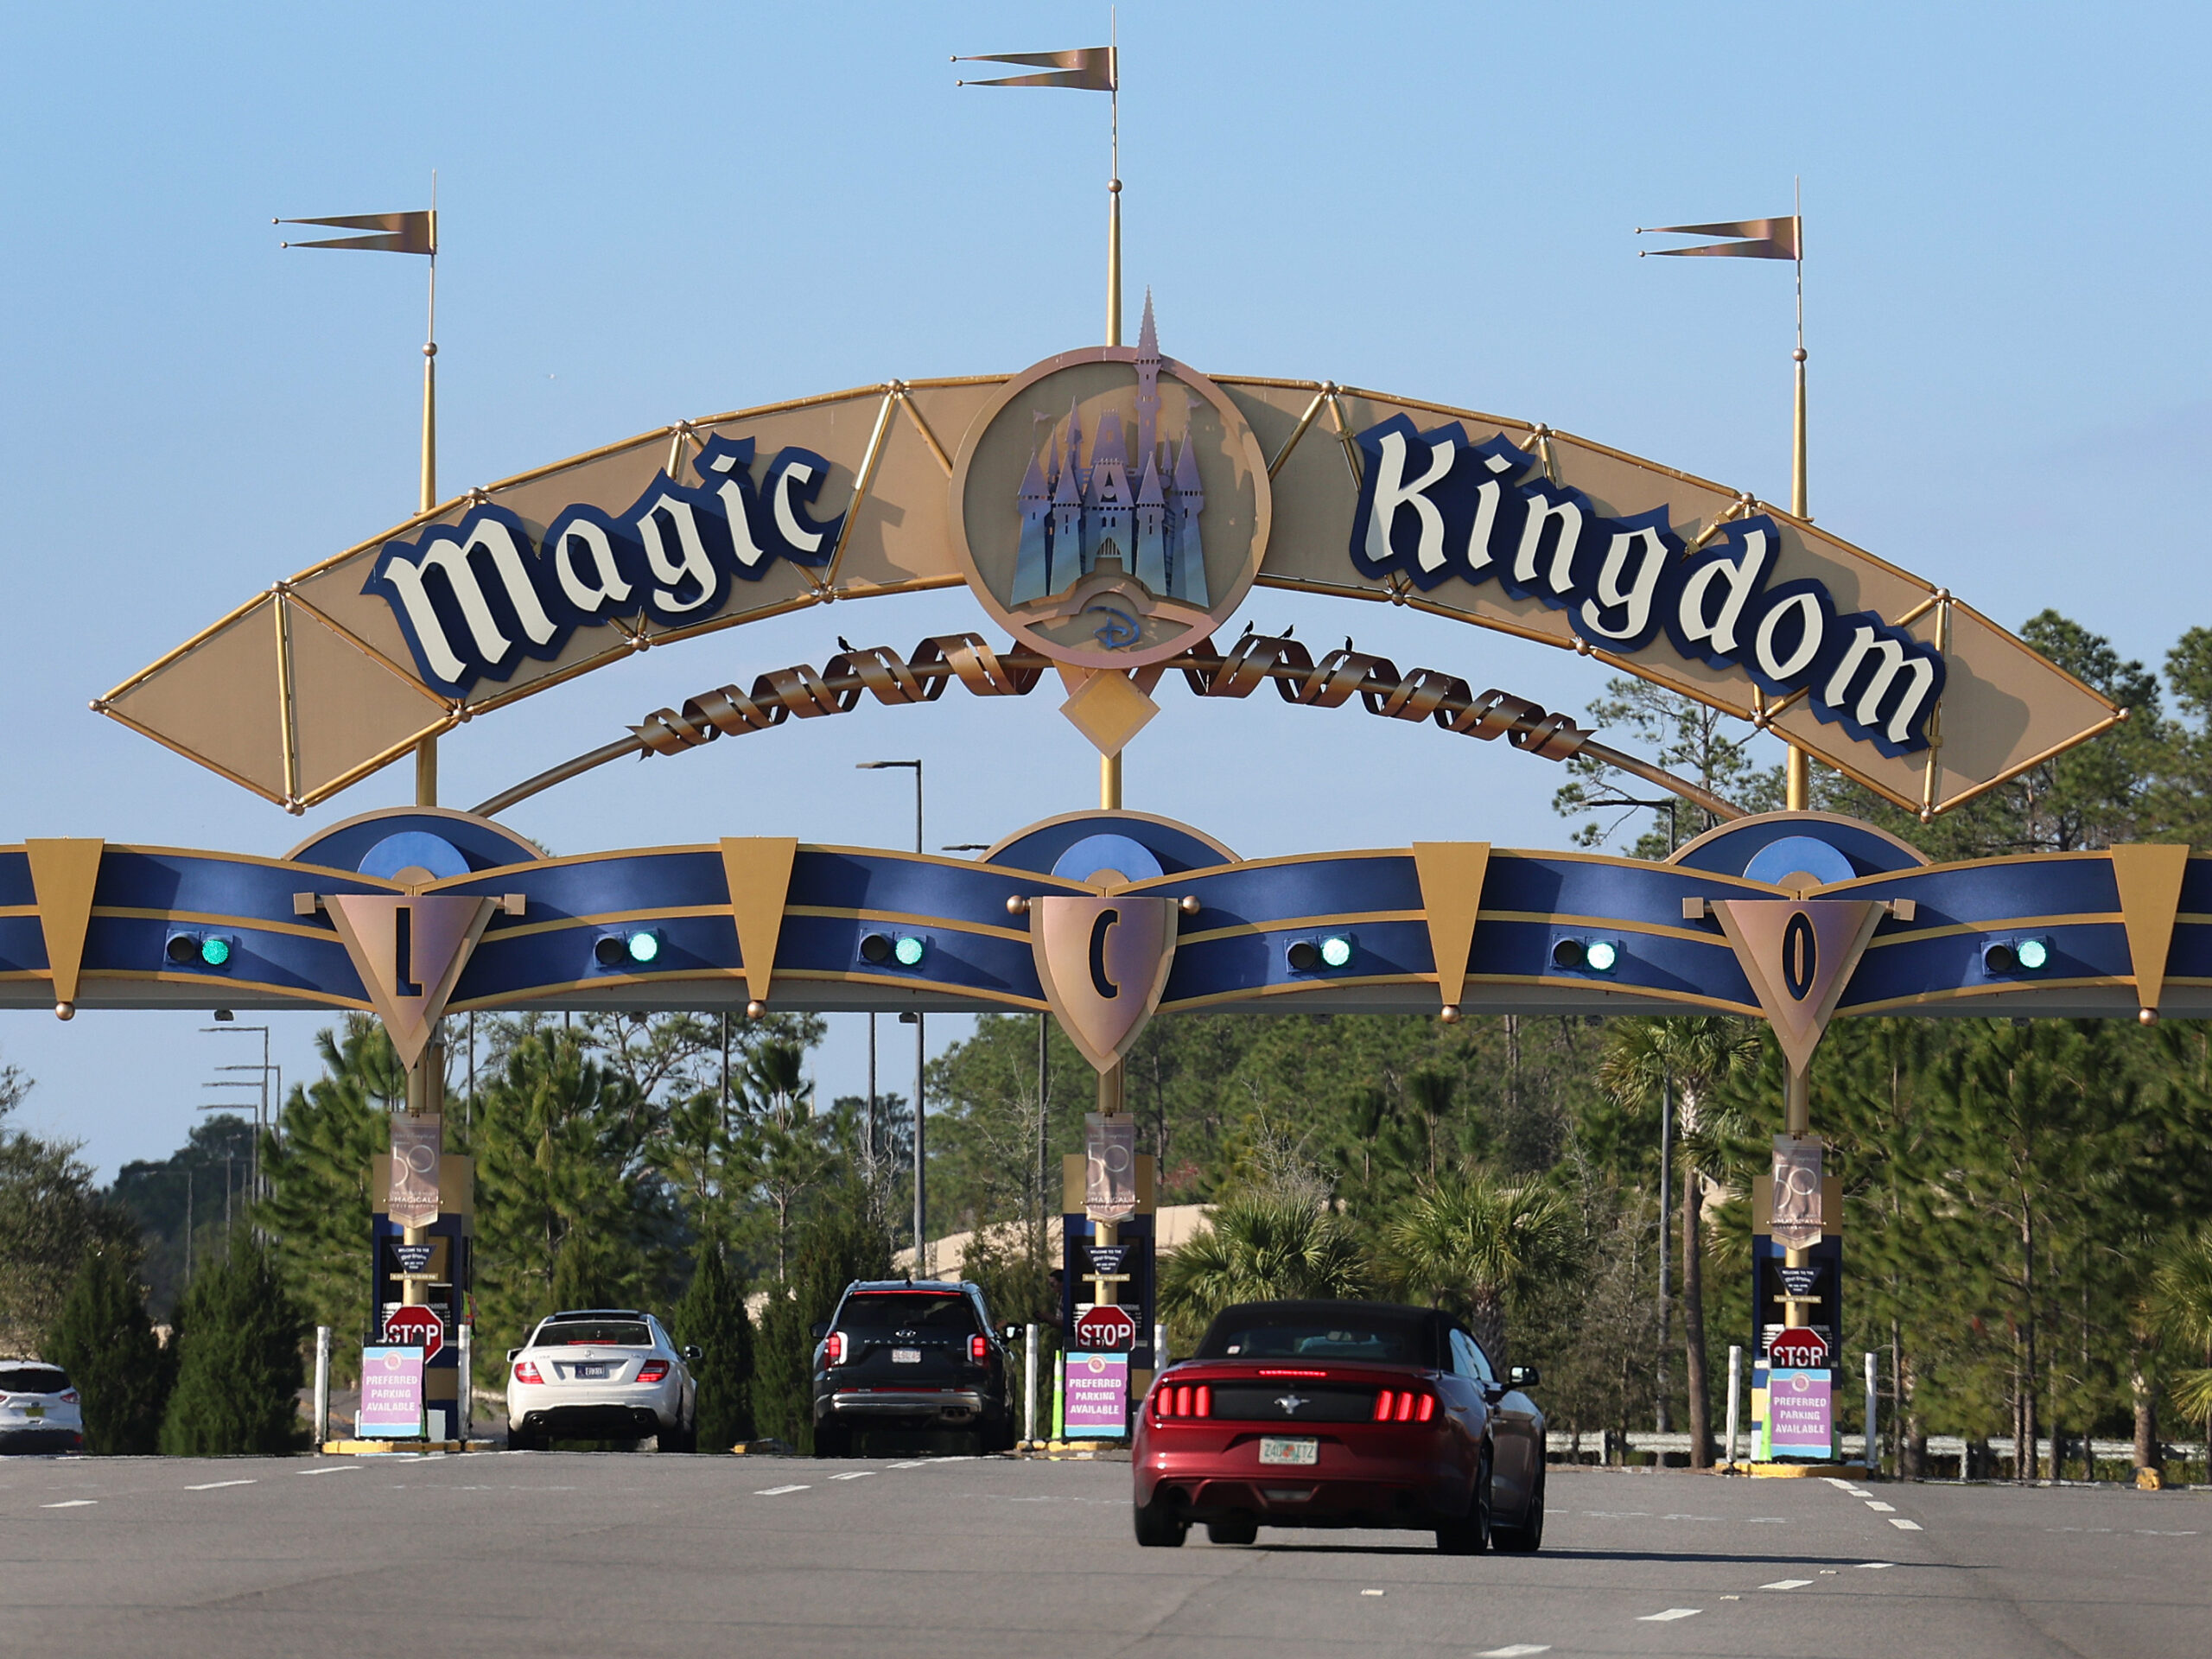 a Walt Disney World entrance